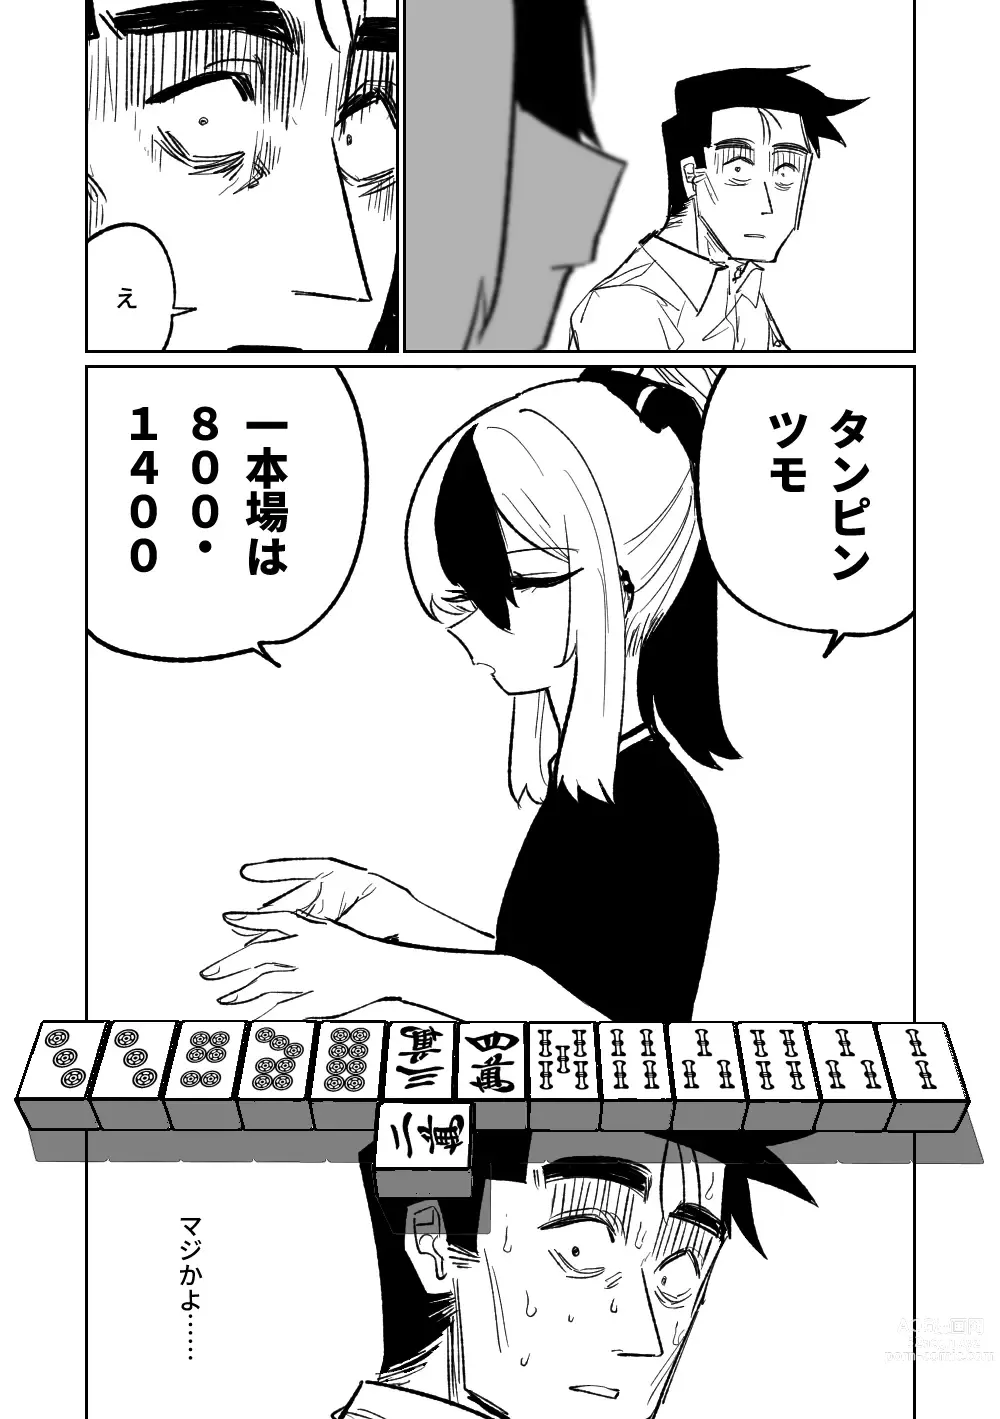 Page 181 of doujinshi Benriya 68 Datsui Mahjong Ichi ~Sankaisen~